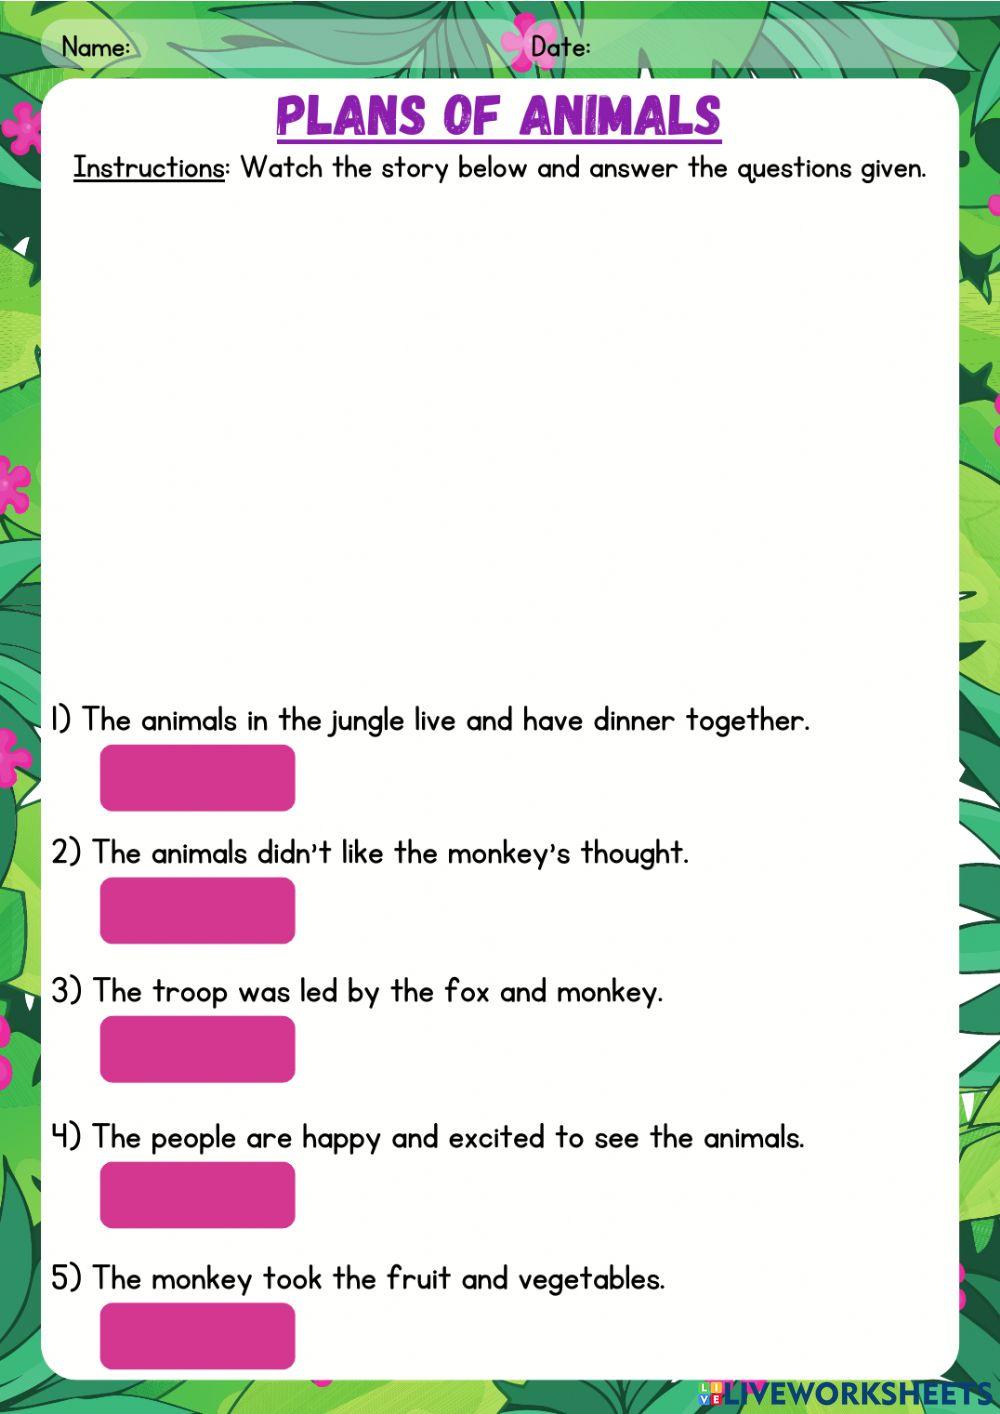 Plans of Animals